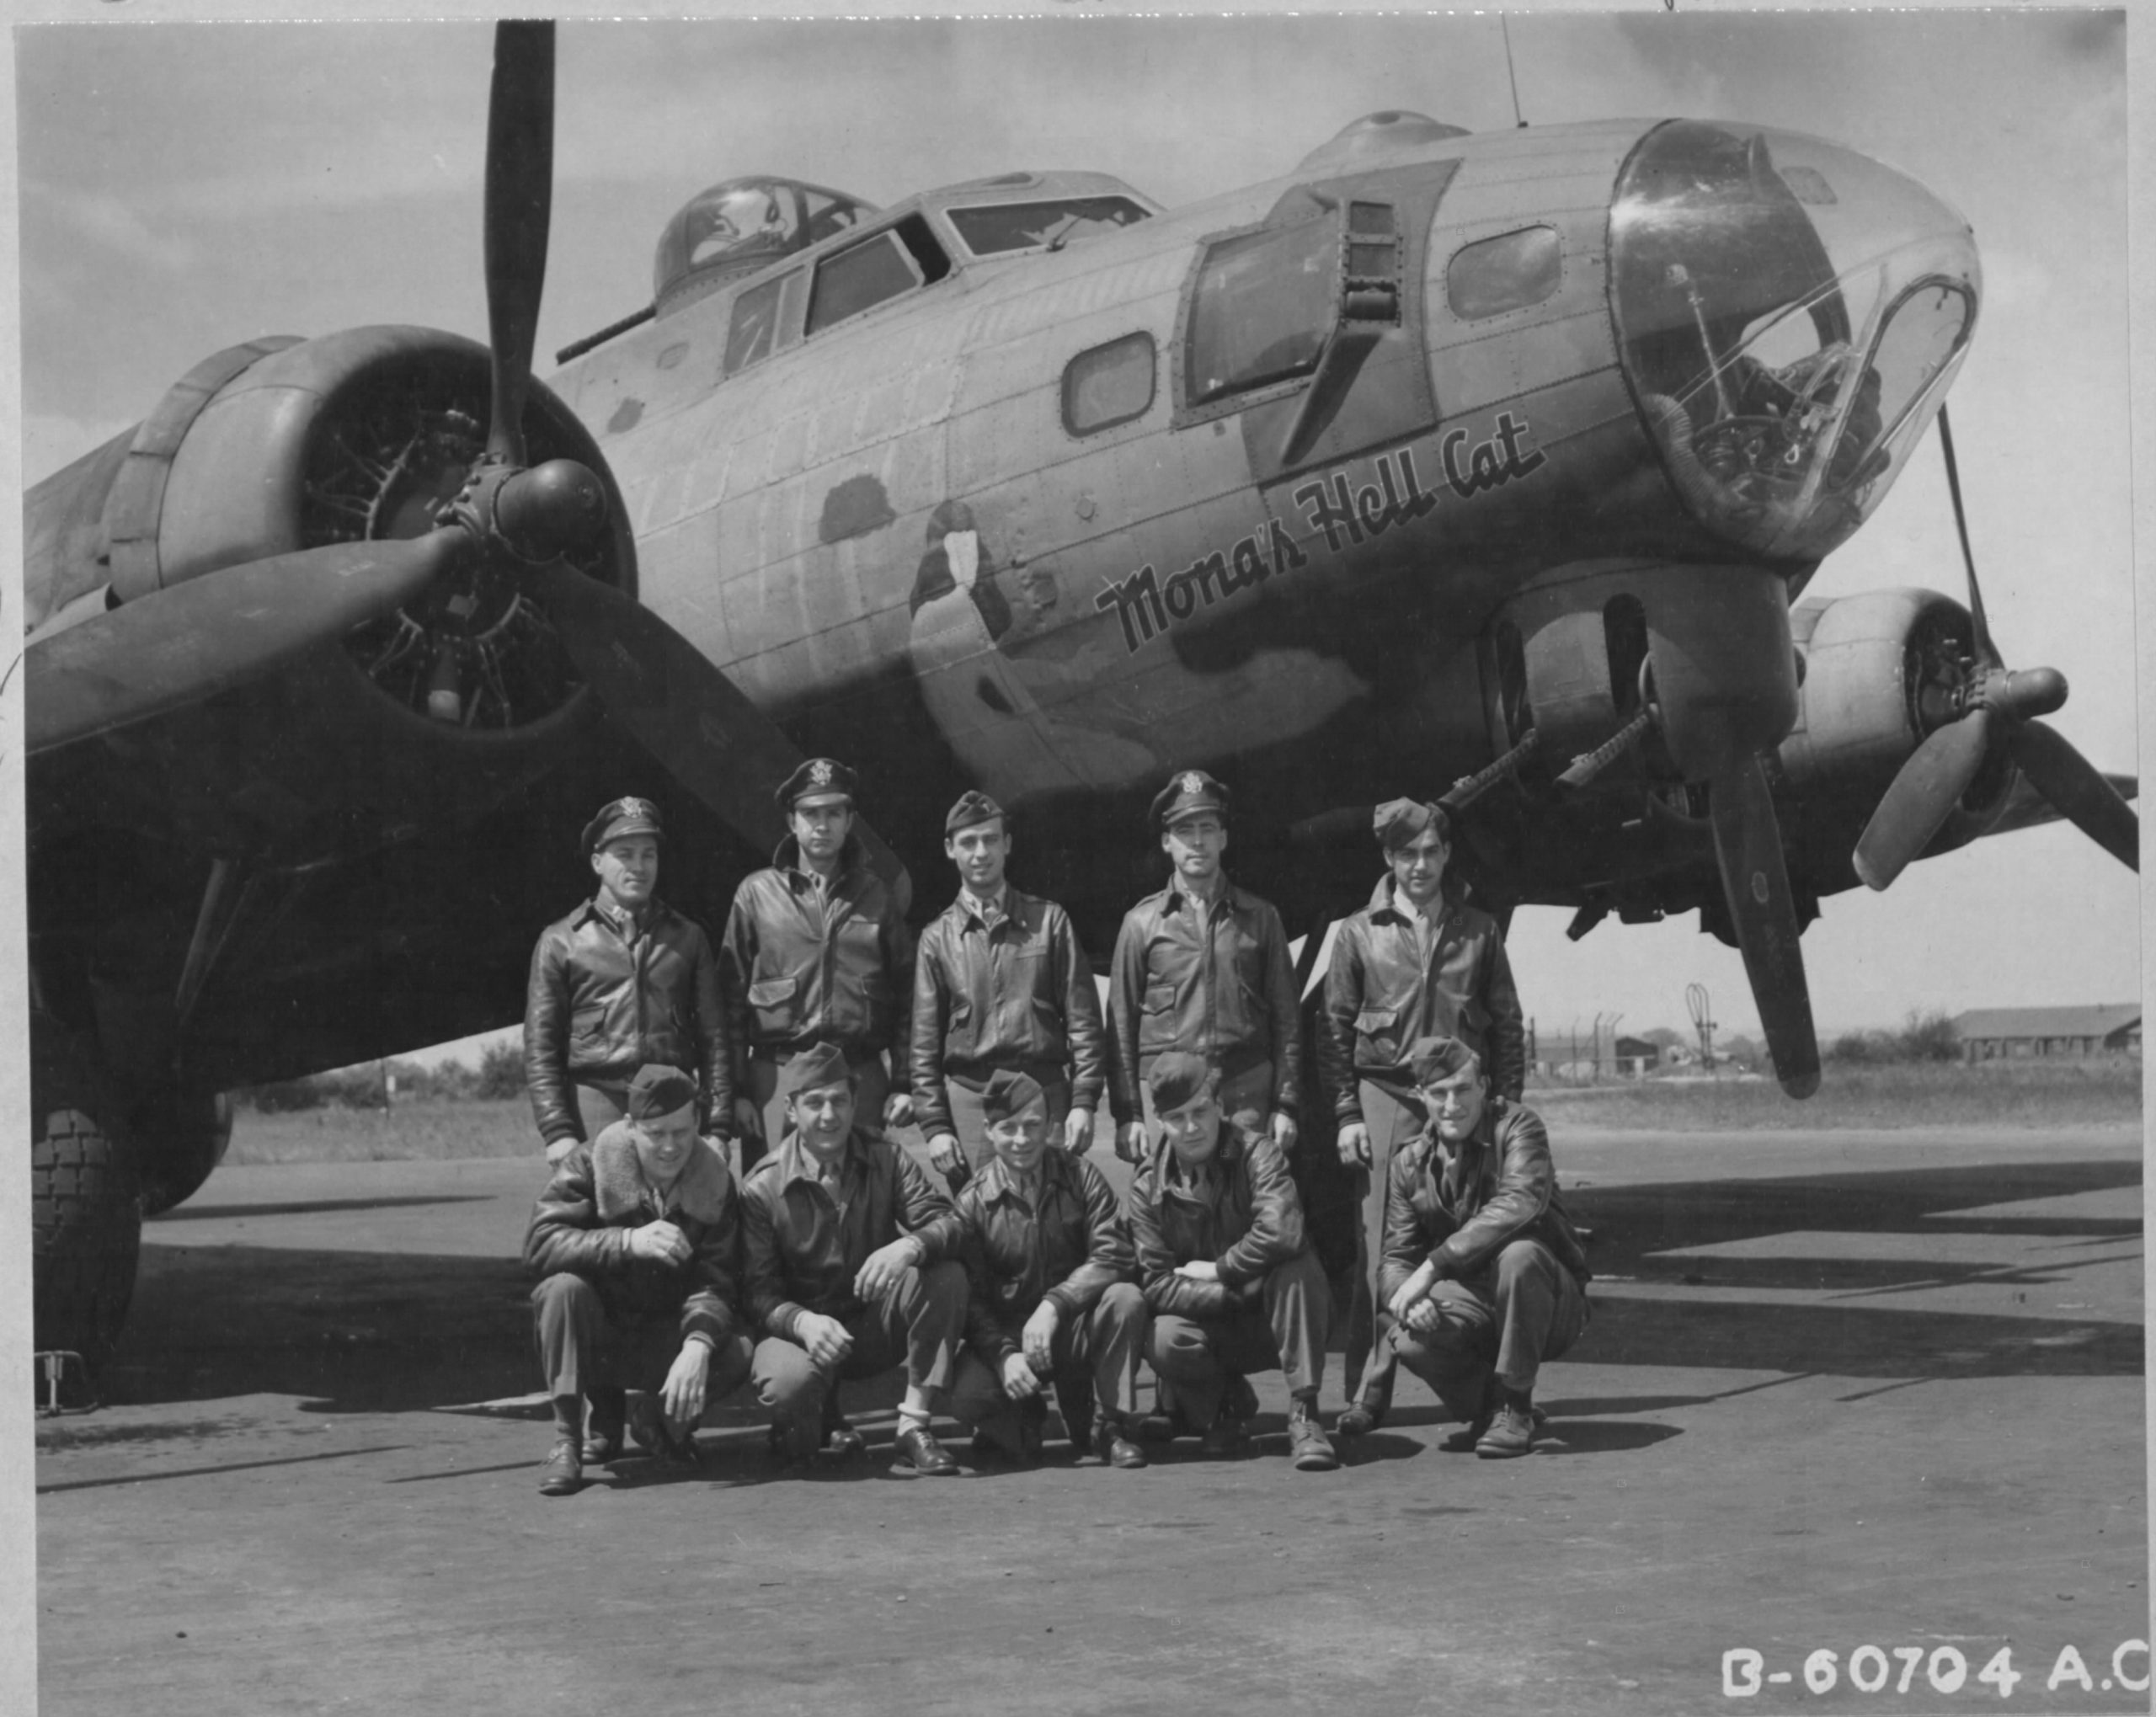 B-17G Mona’s Hell Cat